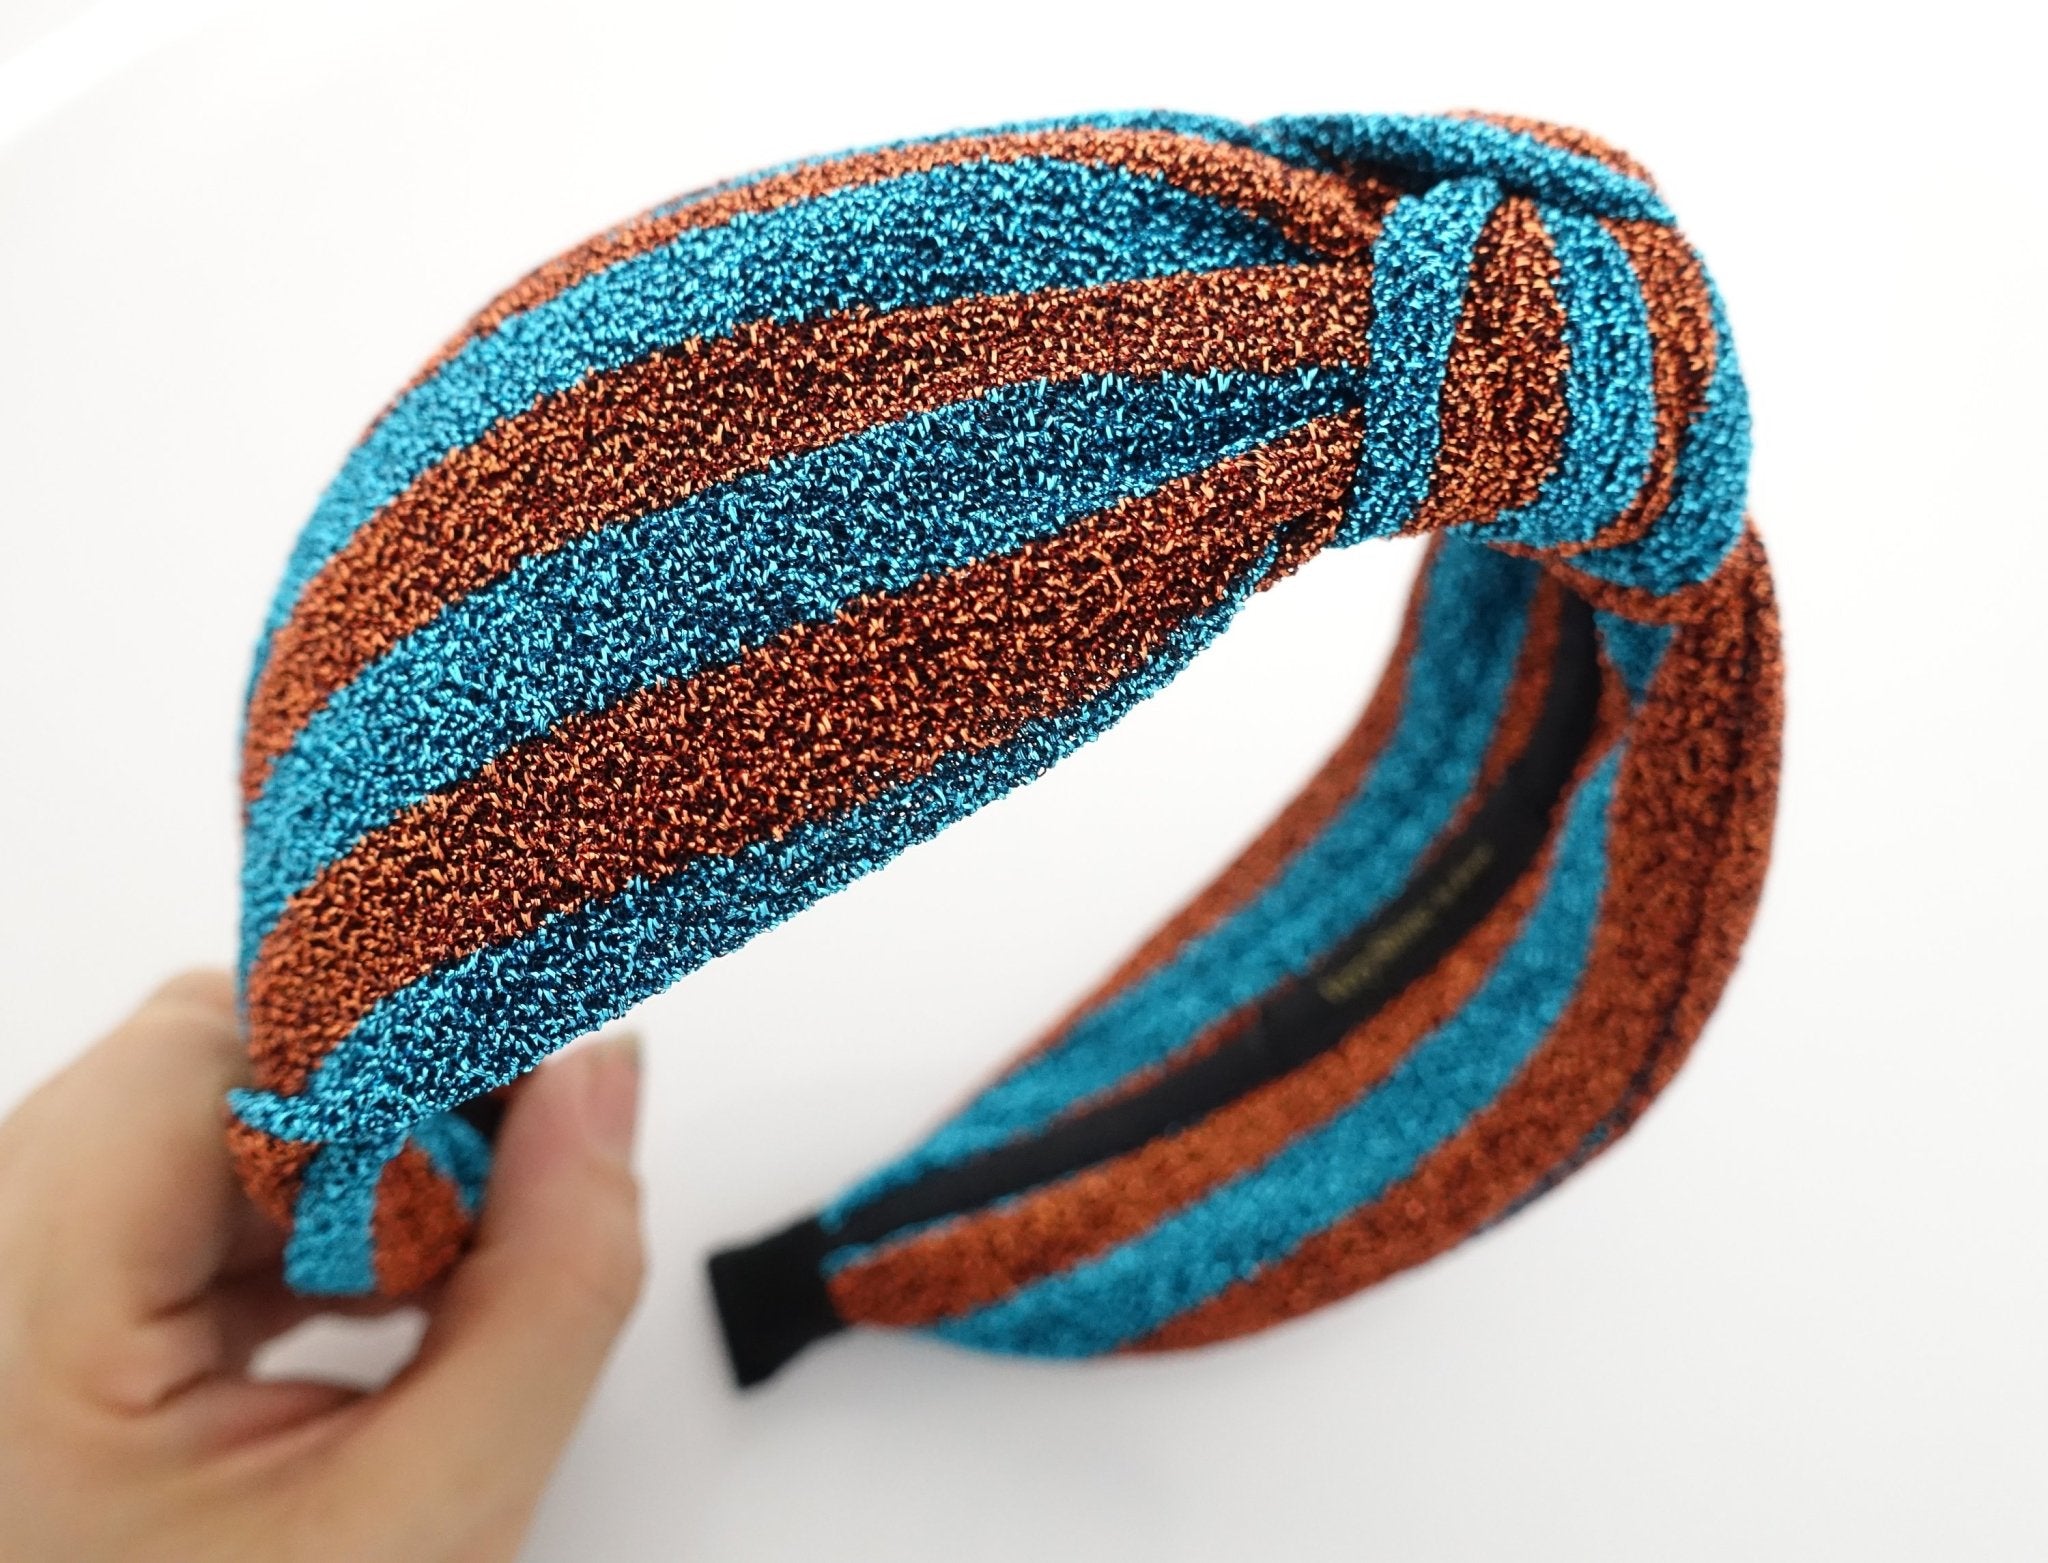 veryshine.com hairband/headband glittering stripe front knot headband vivid stylish fashion hairband